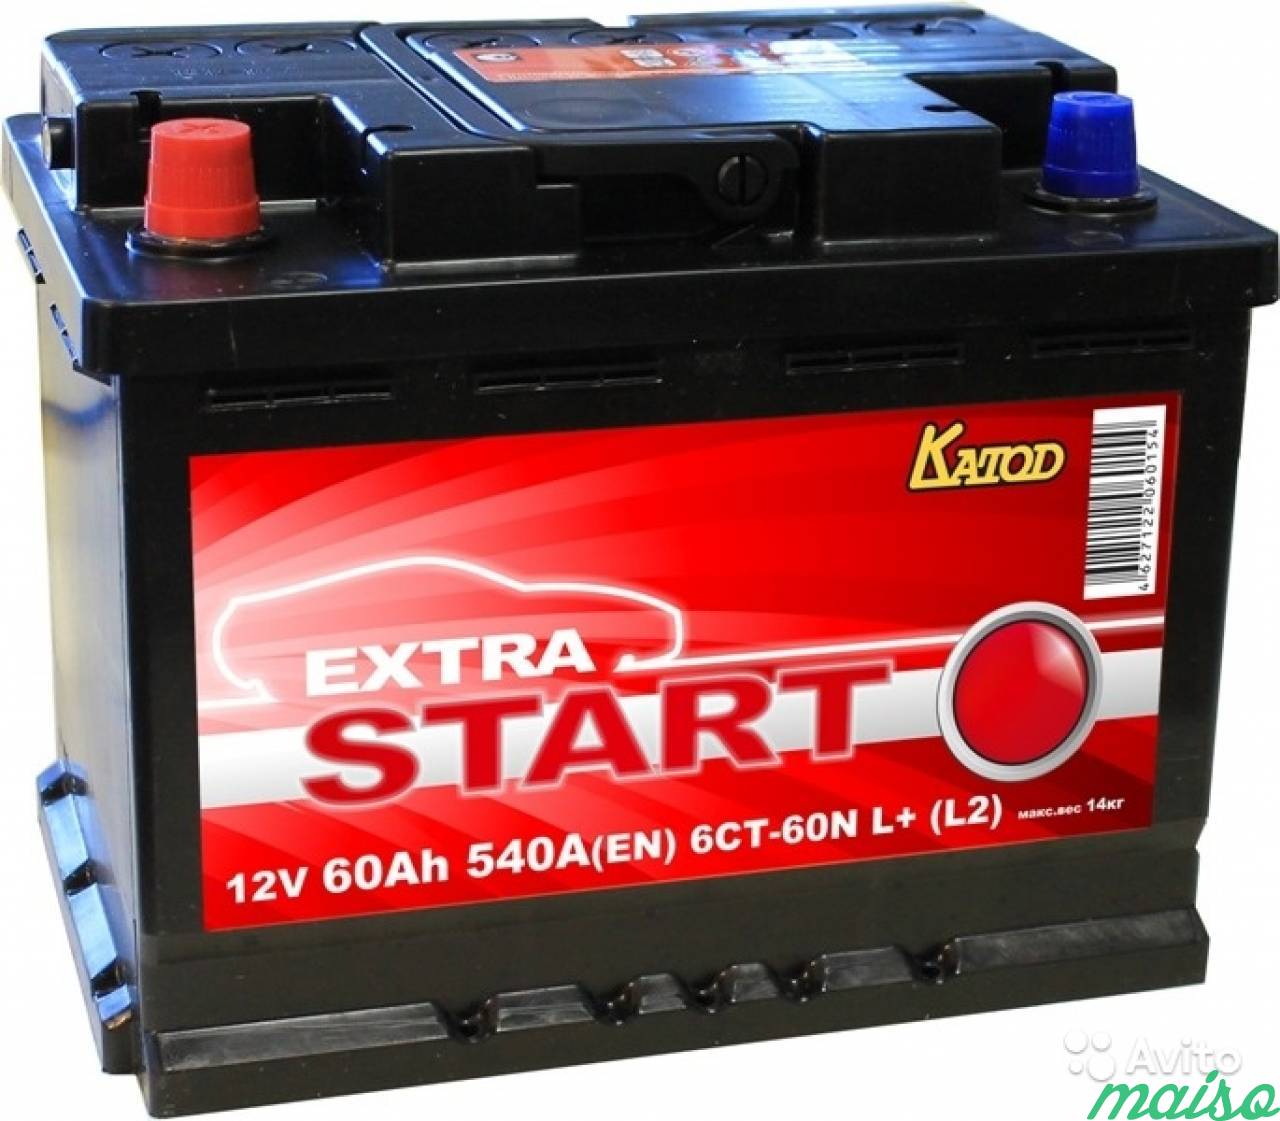 1 старт отзывы. Аккумулятор Extra start 6ст-60n l+ (l2). Катод Extra start Extra start 60ач 540a. Аккумулятор катод Extra start 6ст-60n l+ (l2). Аккумулятор Extra start 6ст-60n r+ (l2).